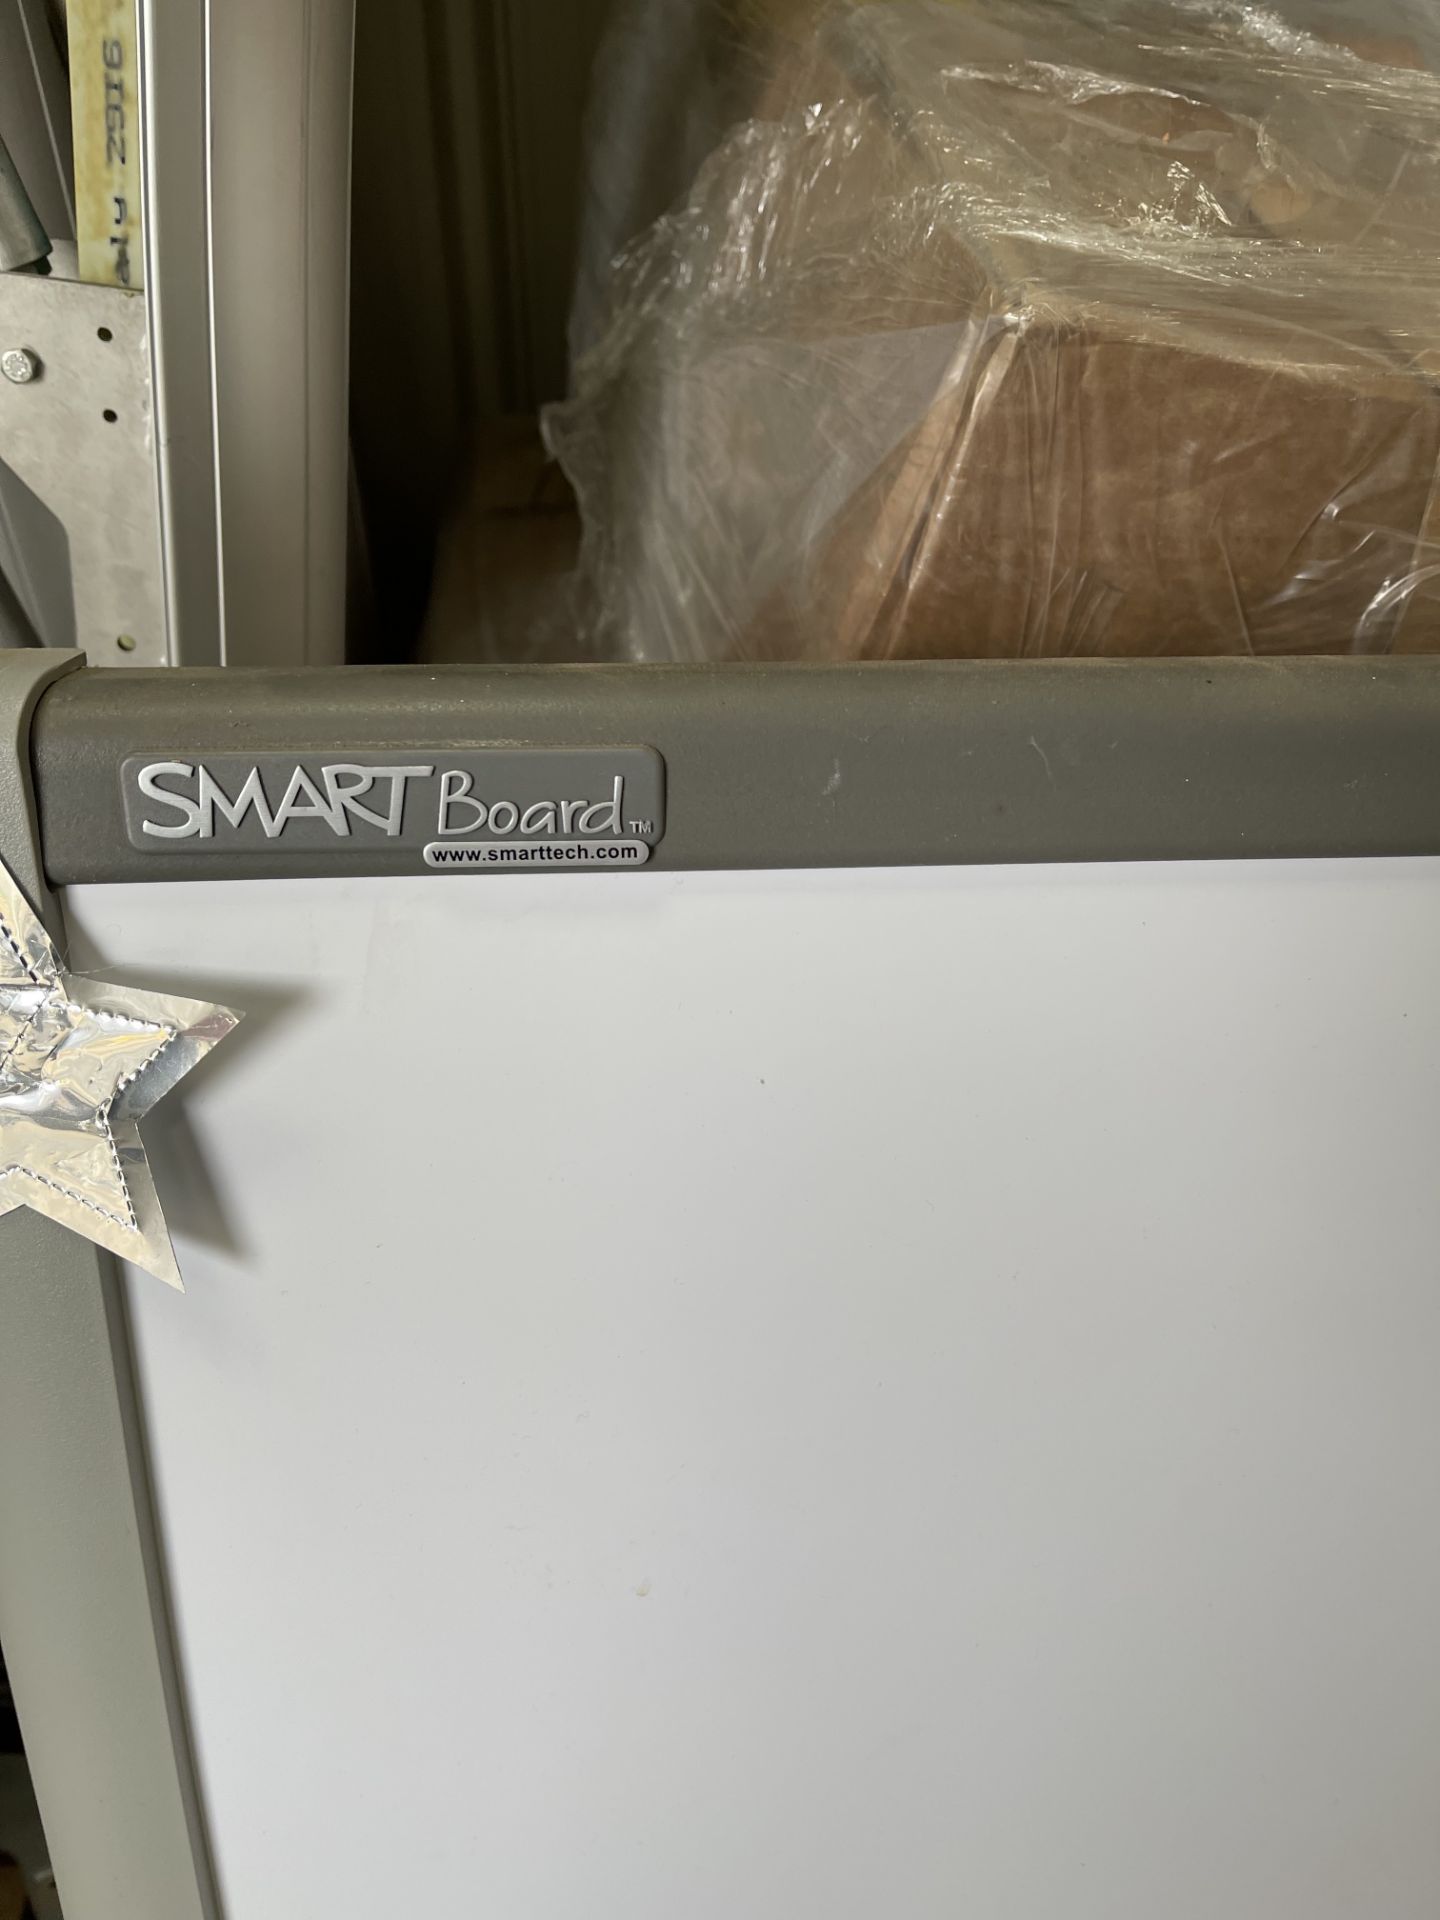 Smart Board SB660 - Image 2 of 3